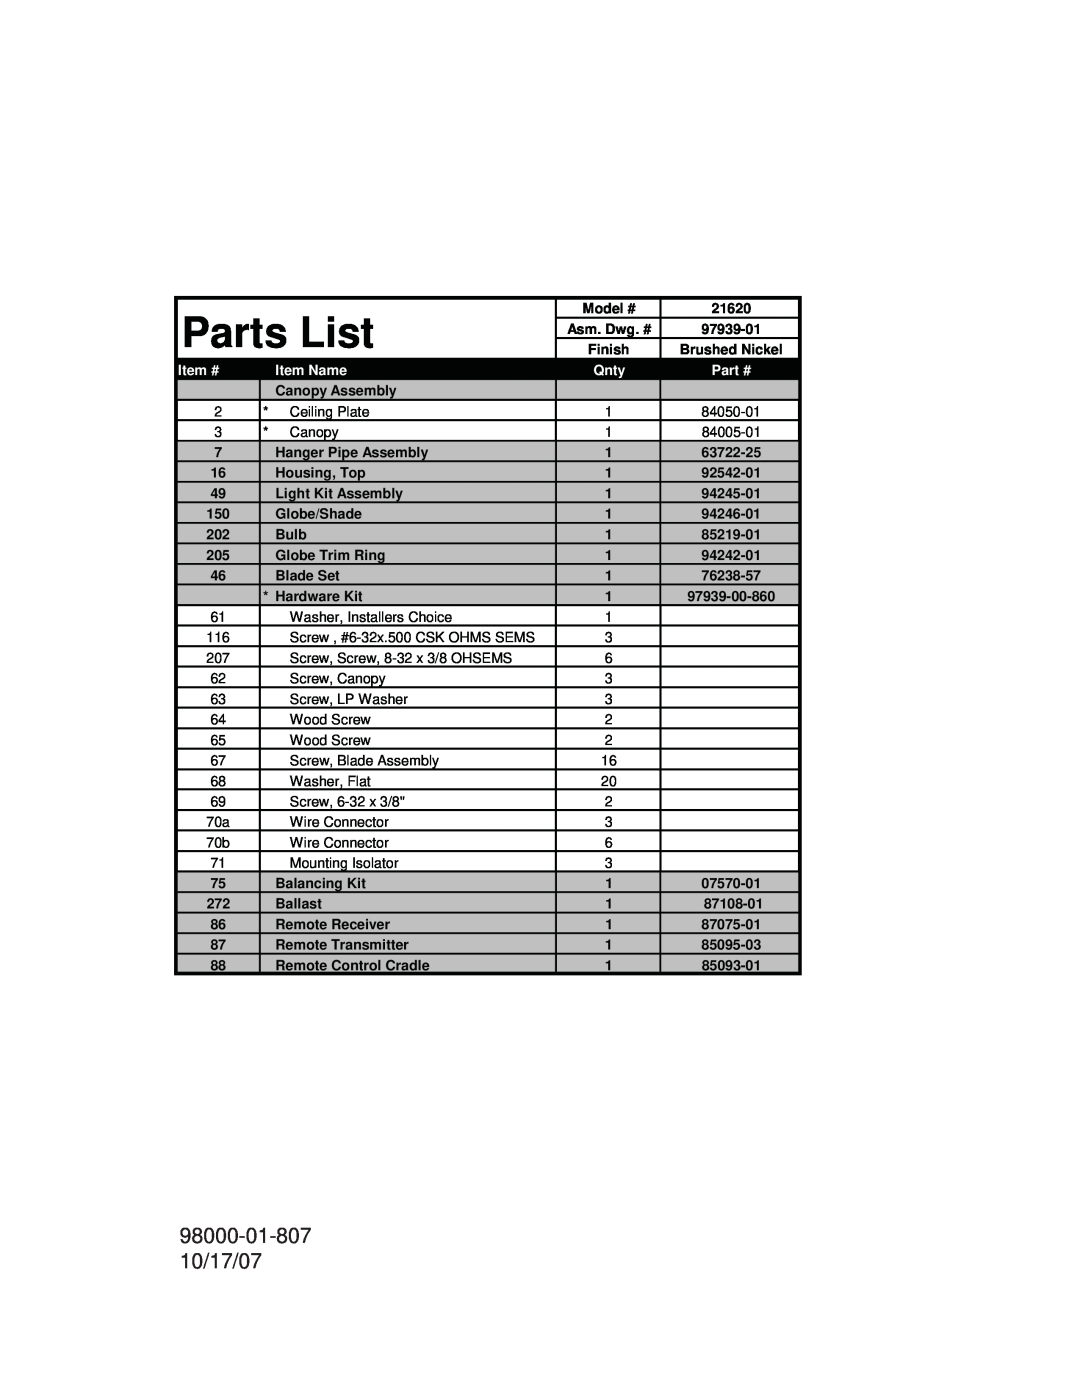 Hunter Fan 21620 warranty Parts List, 98000-01-807 10/17/07, Item #, Item Name, Qnty 